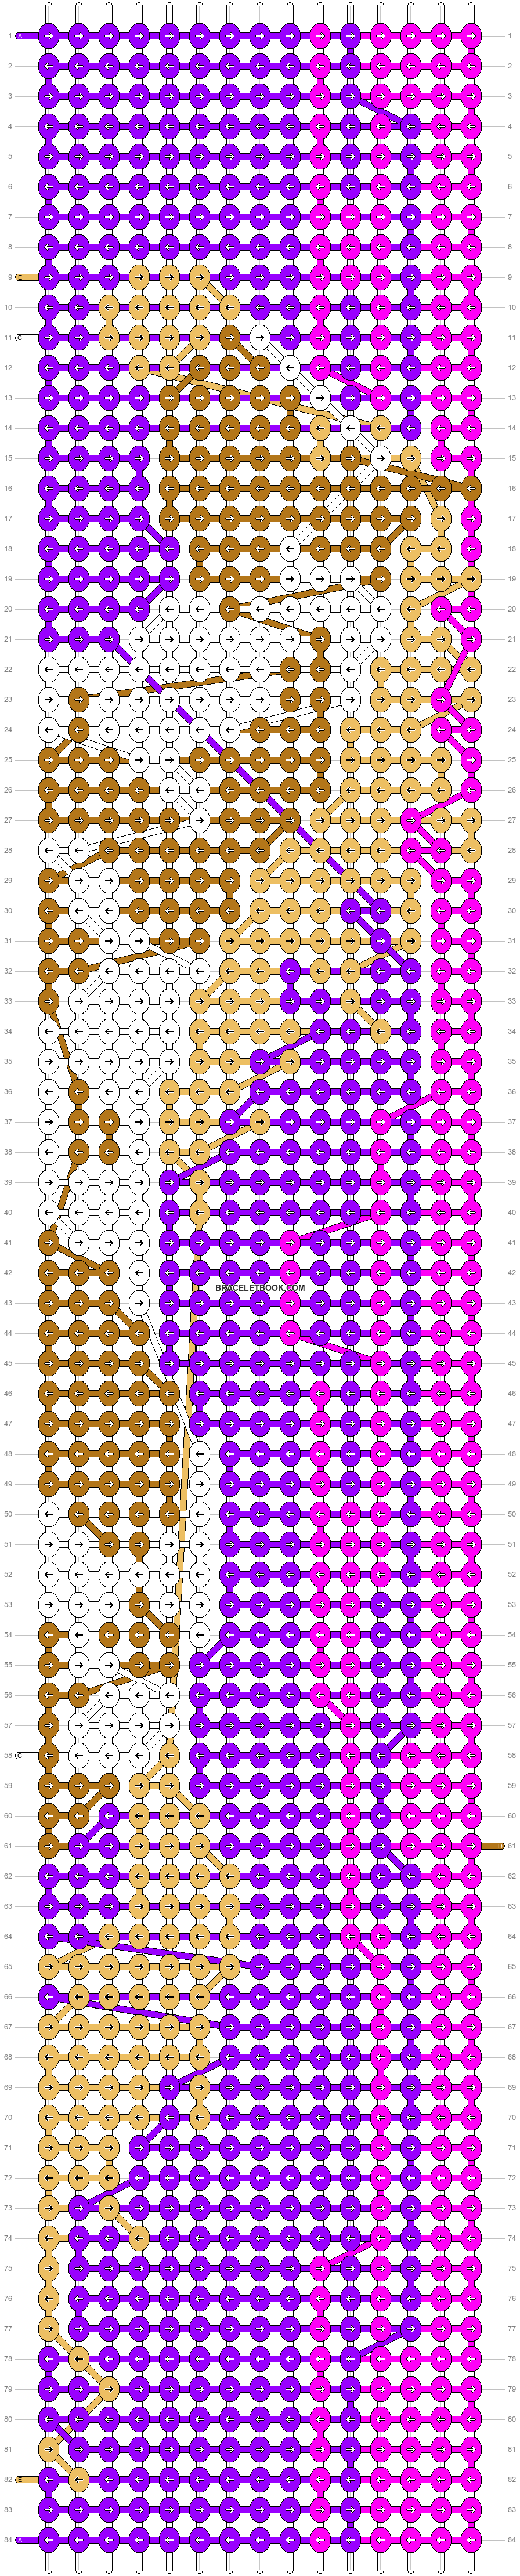 Alpha pattern #29522 variation #71377 pattern